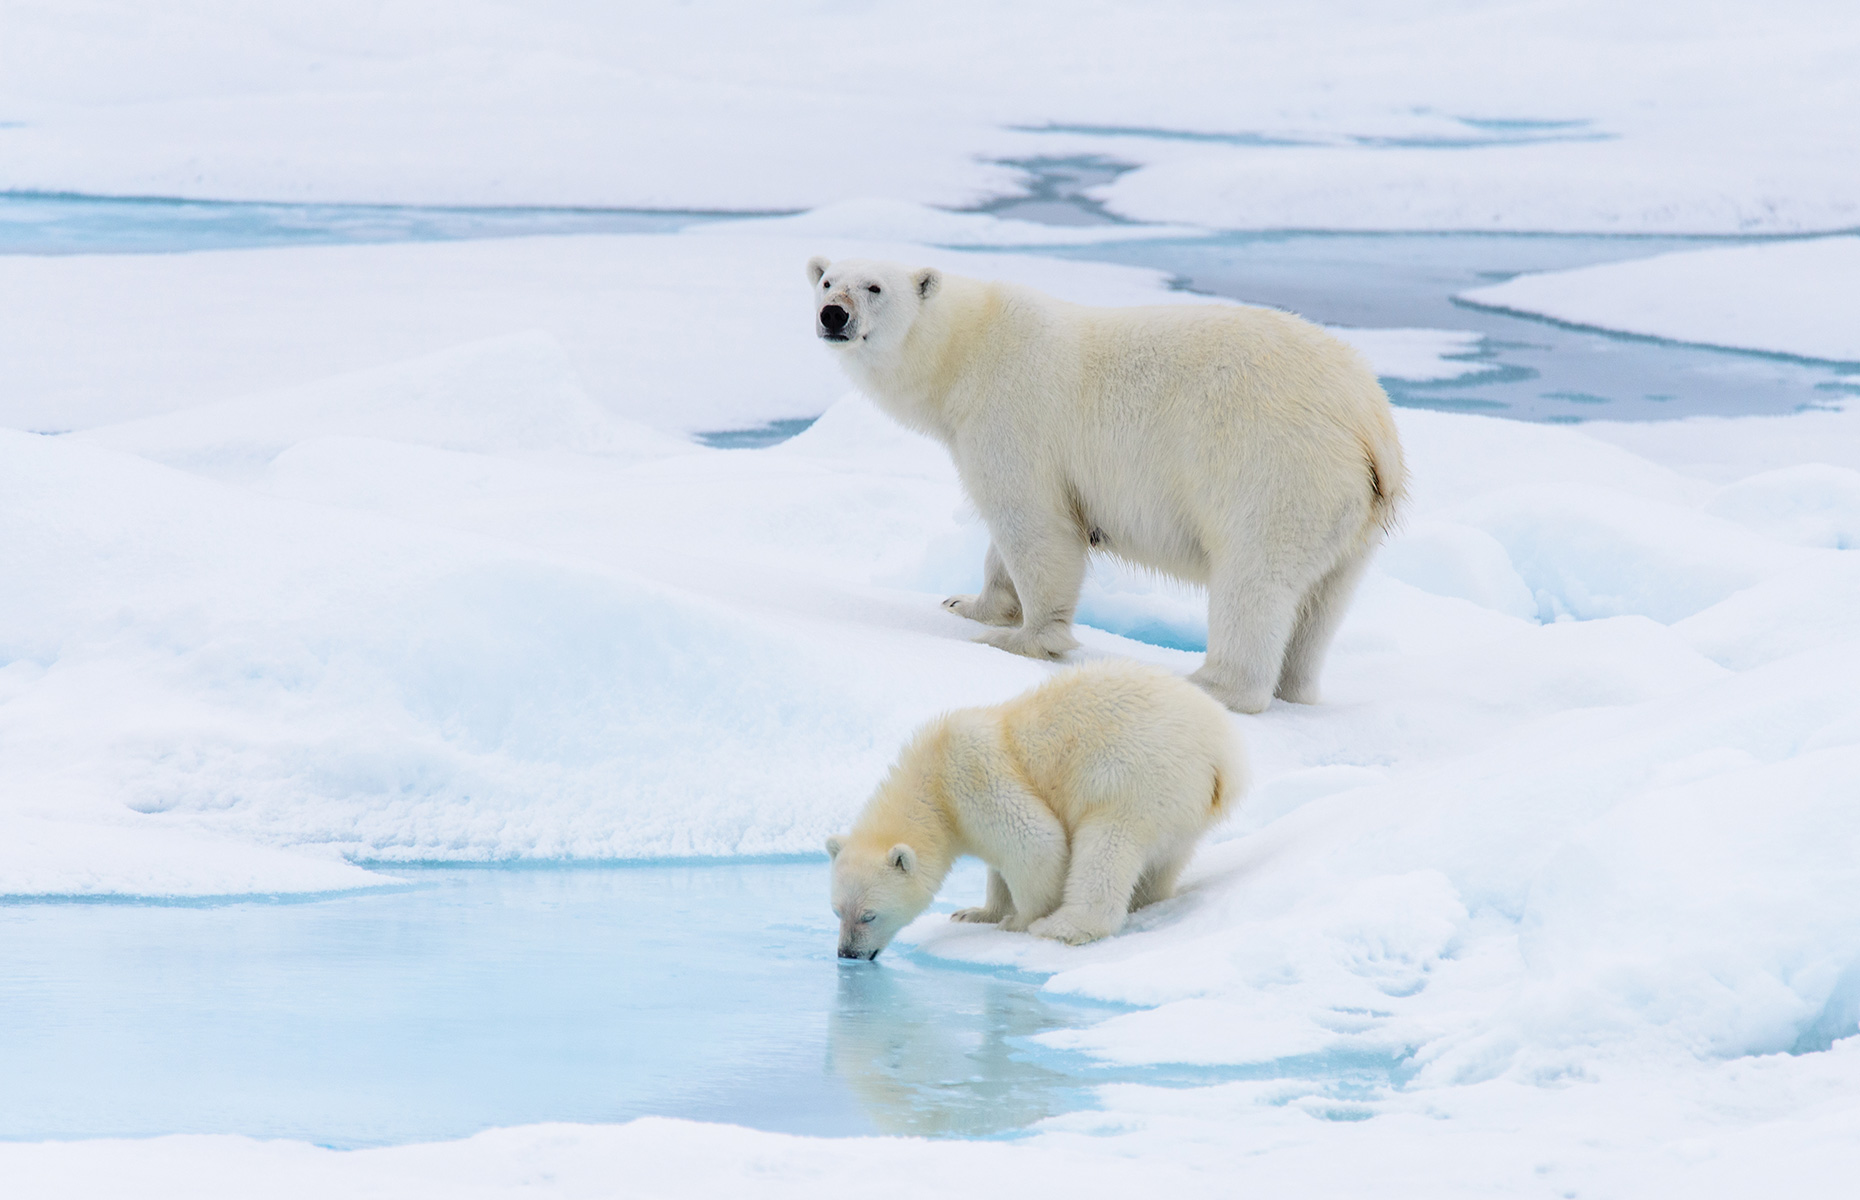 Polar bear on the ice in Svalbard (Image: Alexey Seafarer/Shutterstock)